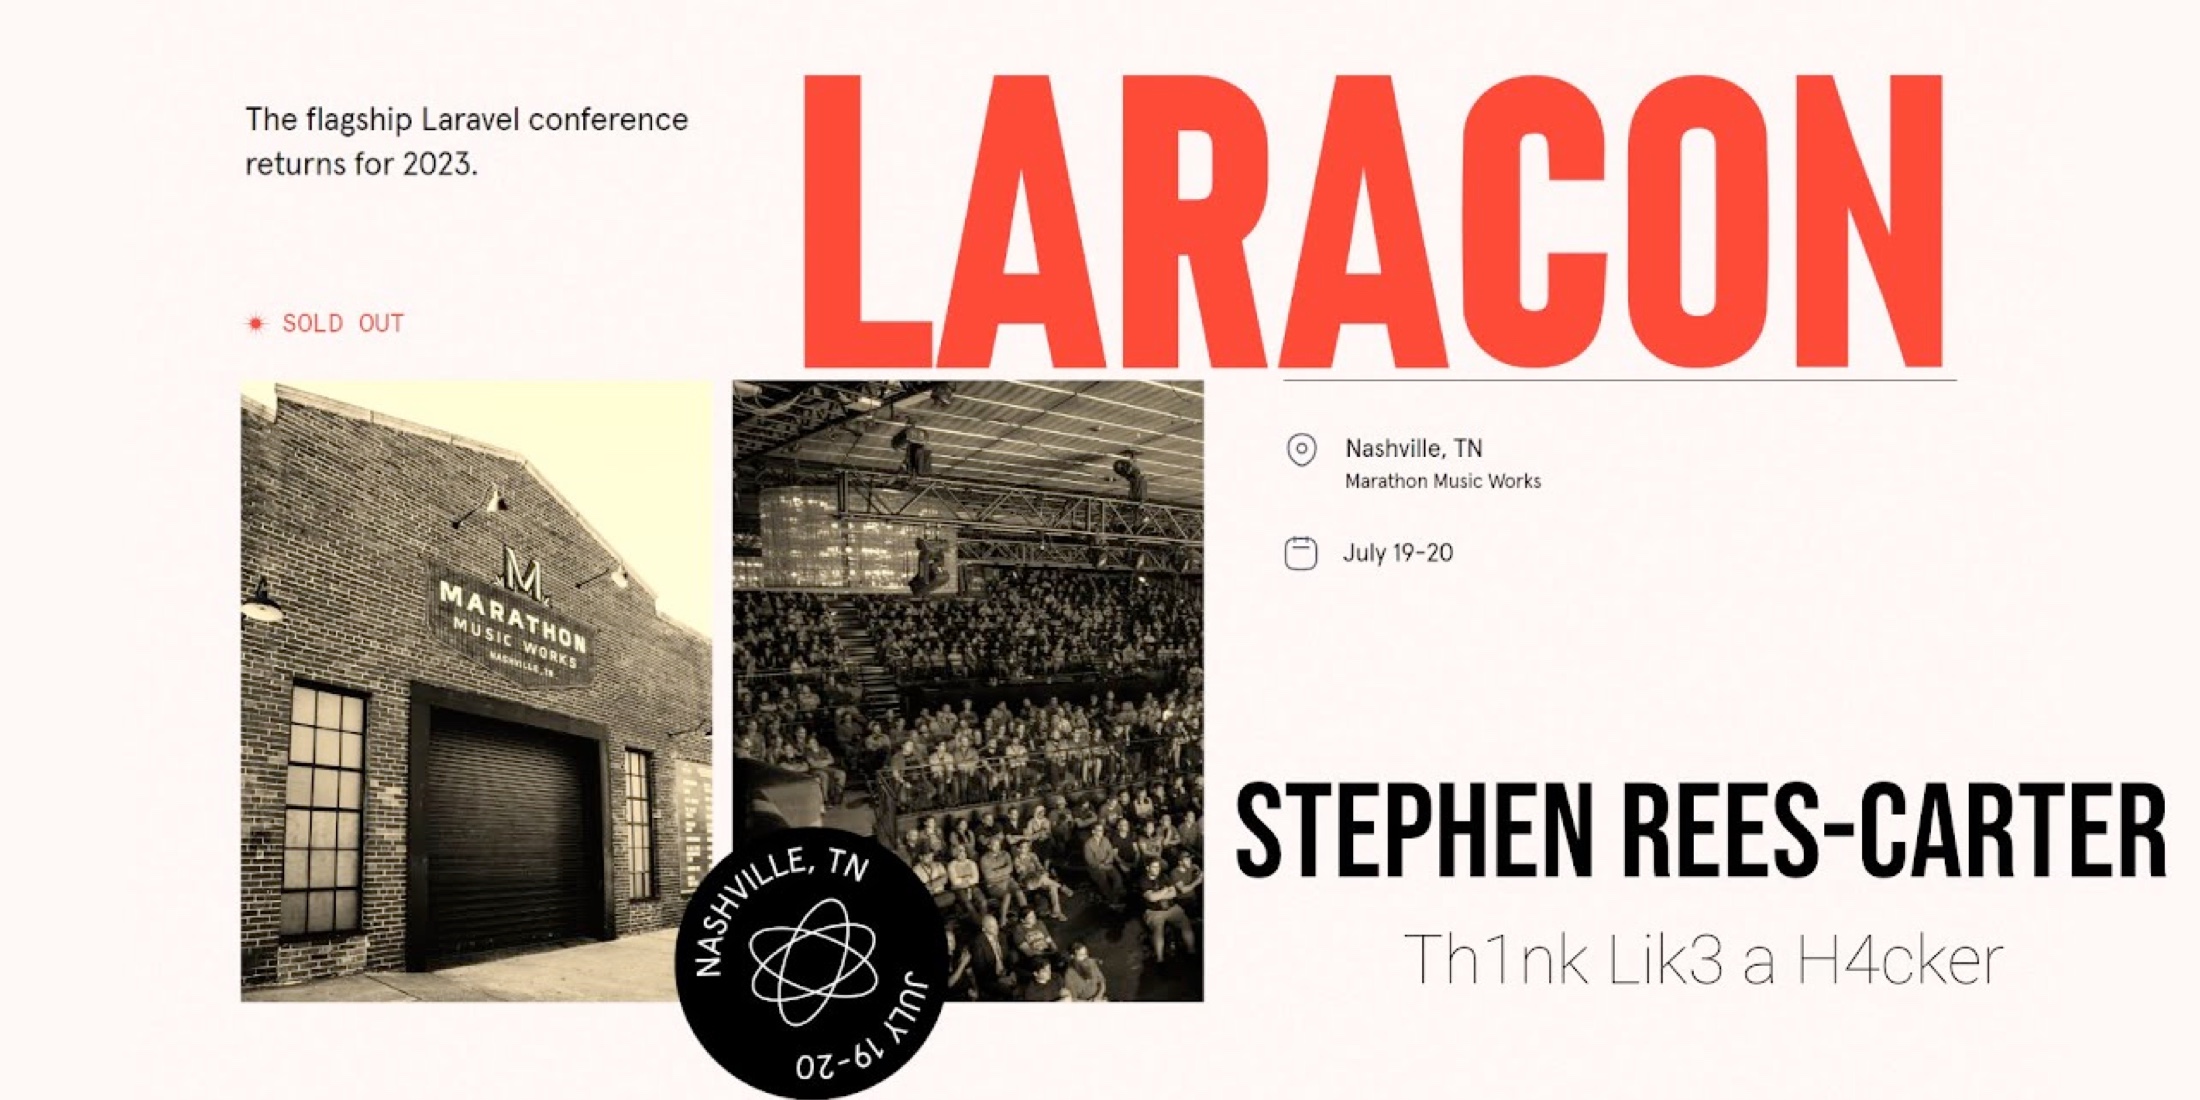 Stephen Rees-Carter's "Th1nk Lik3 a H4cker" talk from Laracon image